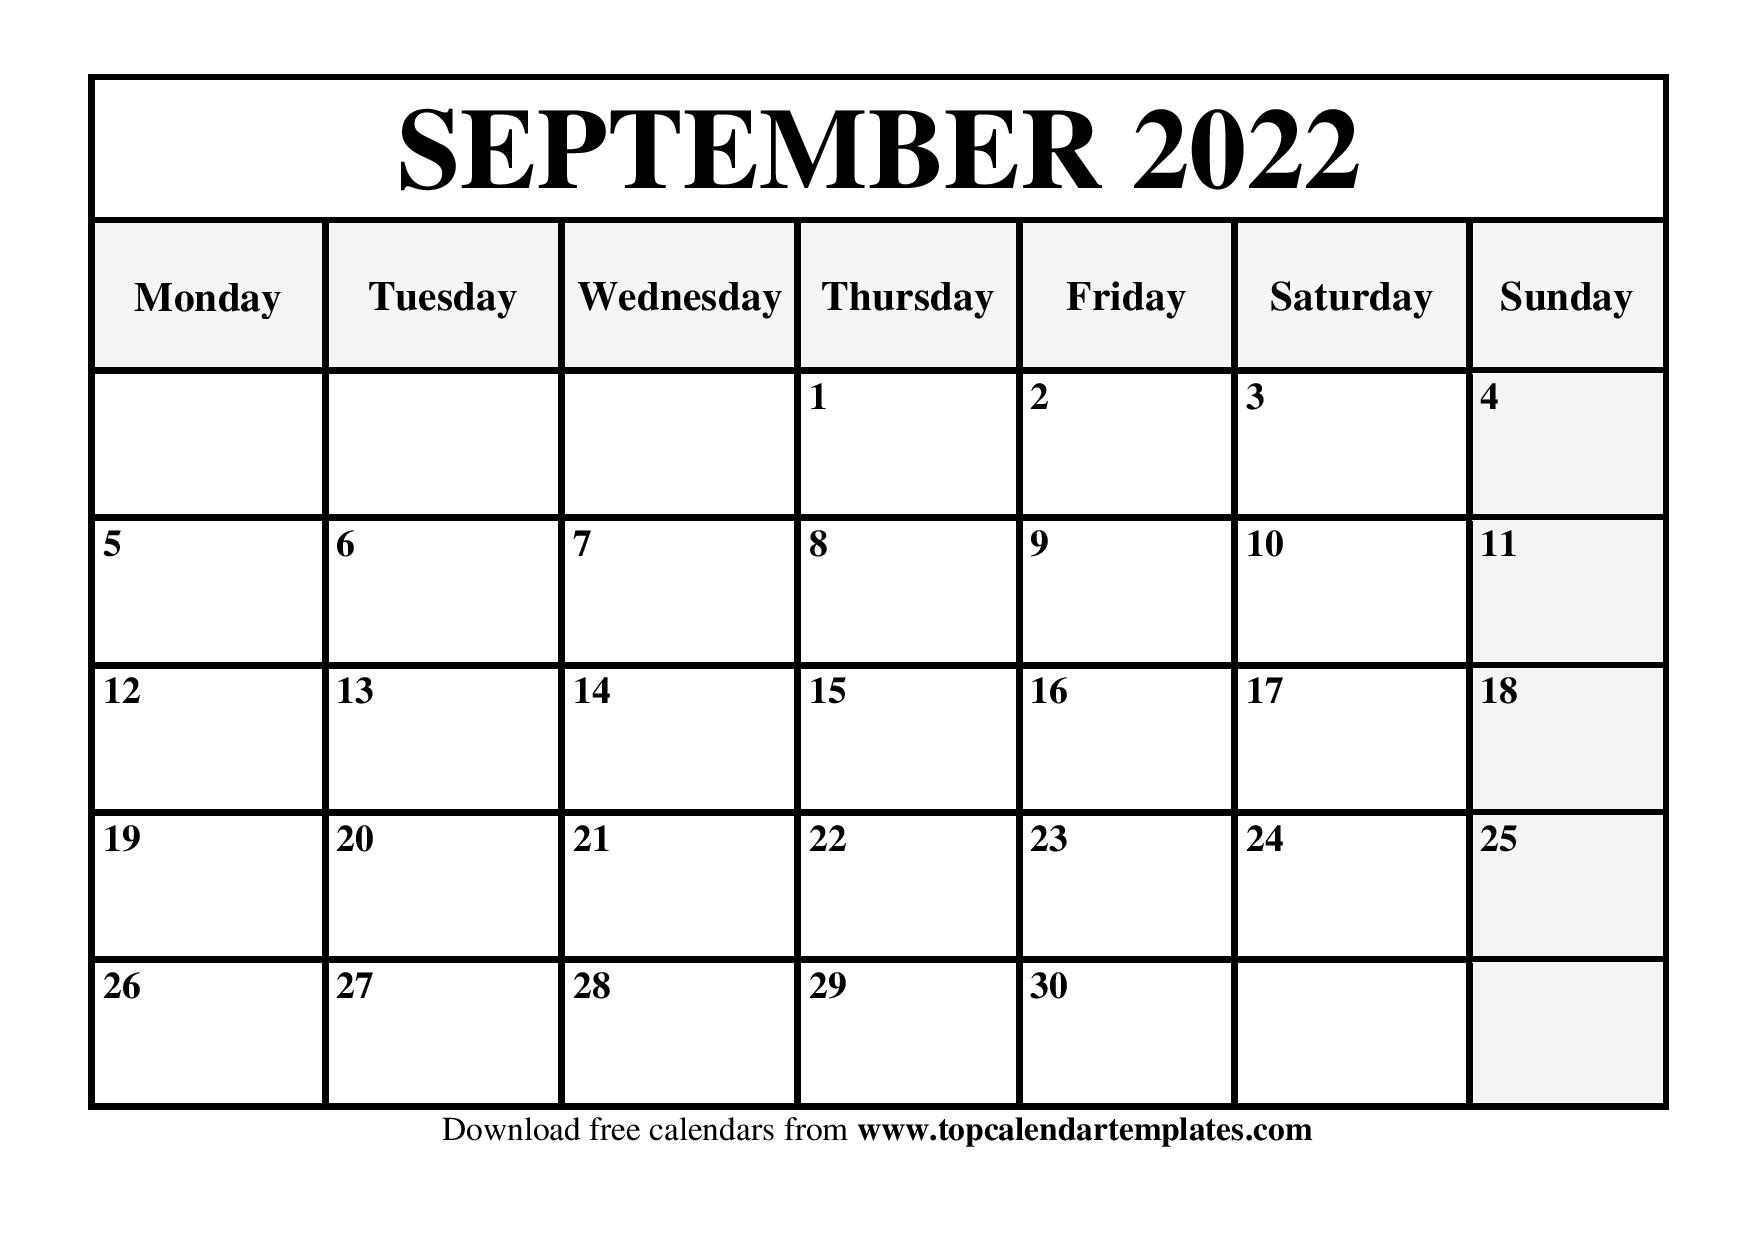 Sep 2022 Calendar Printable Calendar September 2022 Templates - Pdf, Word, Excel